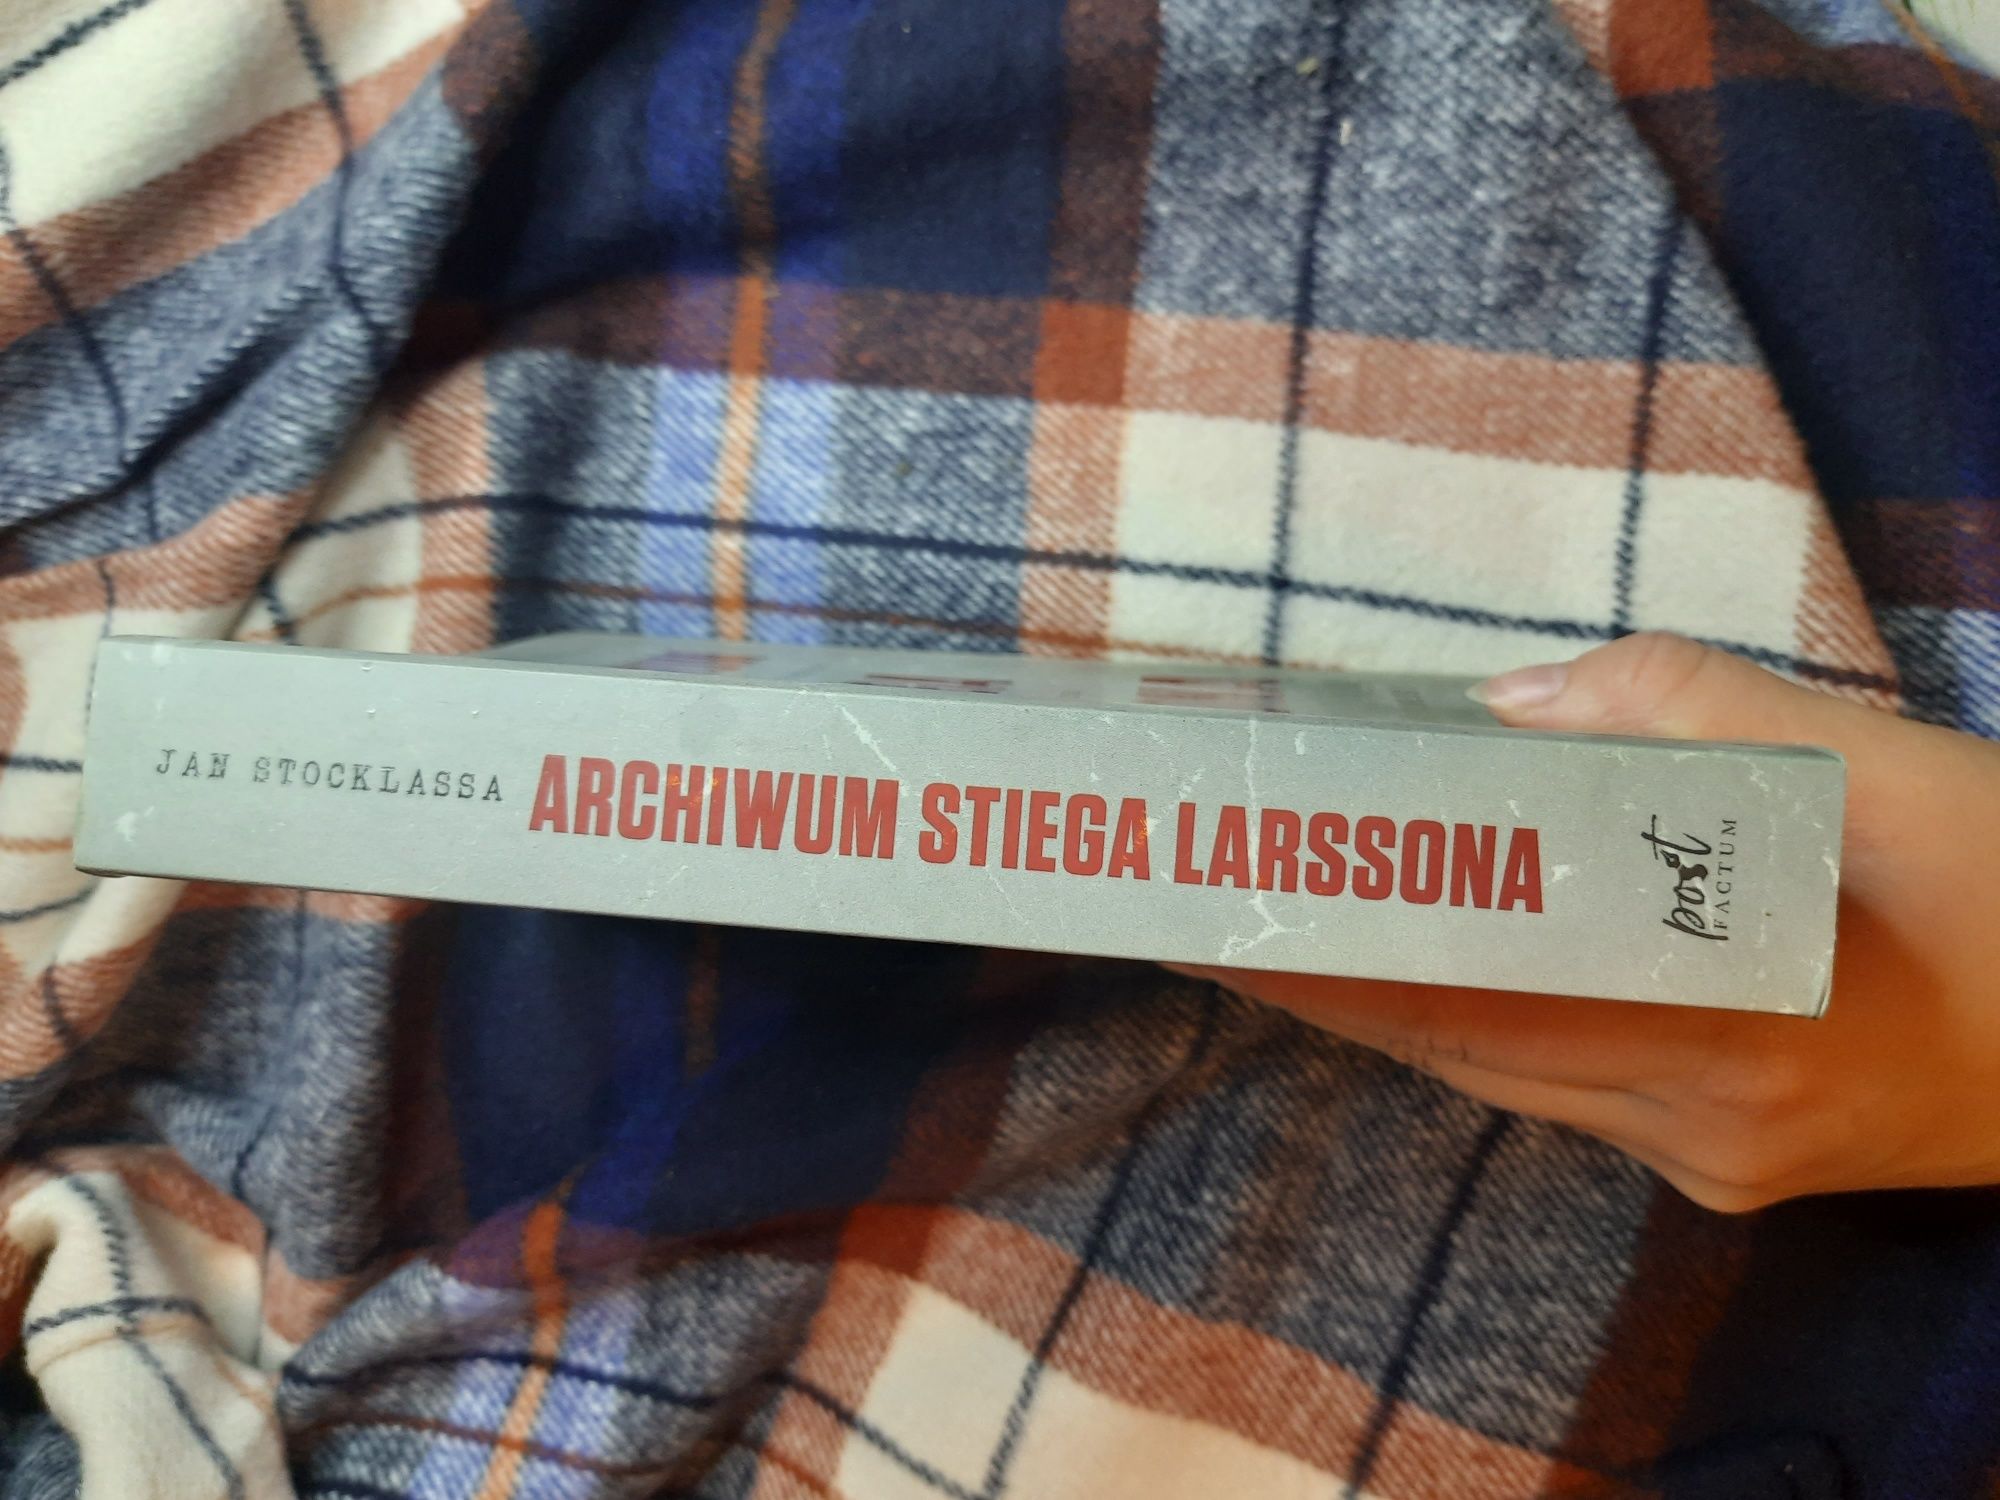 Archiwum Stiega Larssona Jan Stocklassa